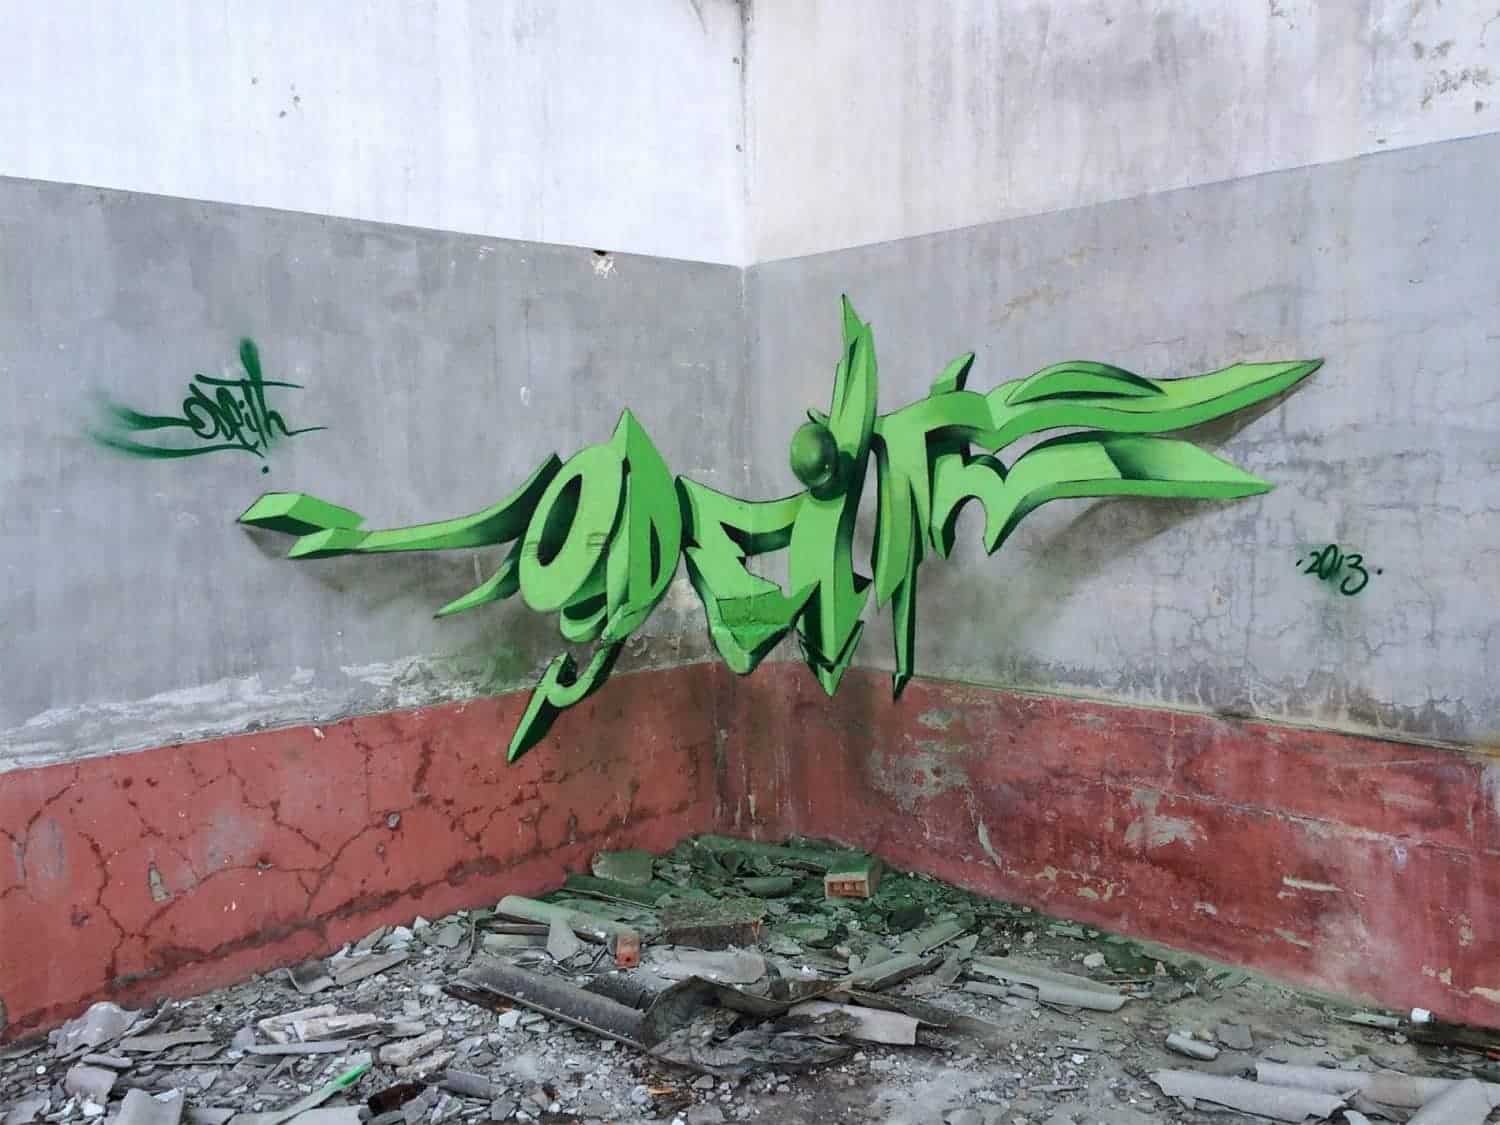 anamorfe graffiti